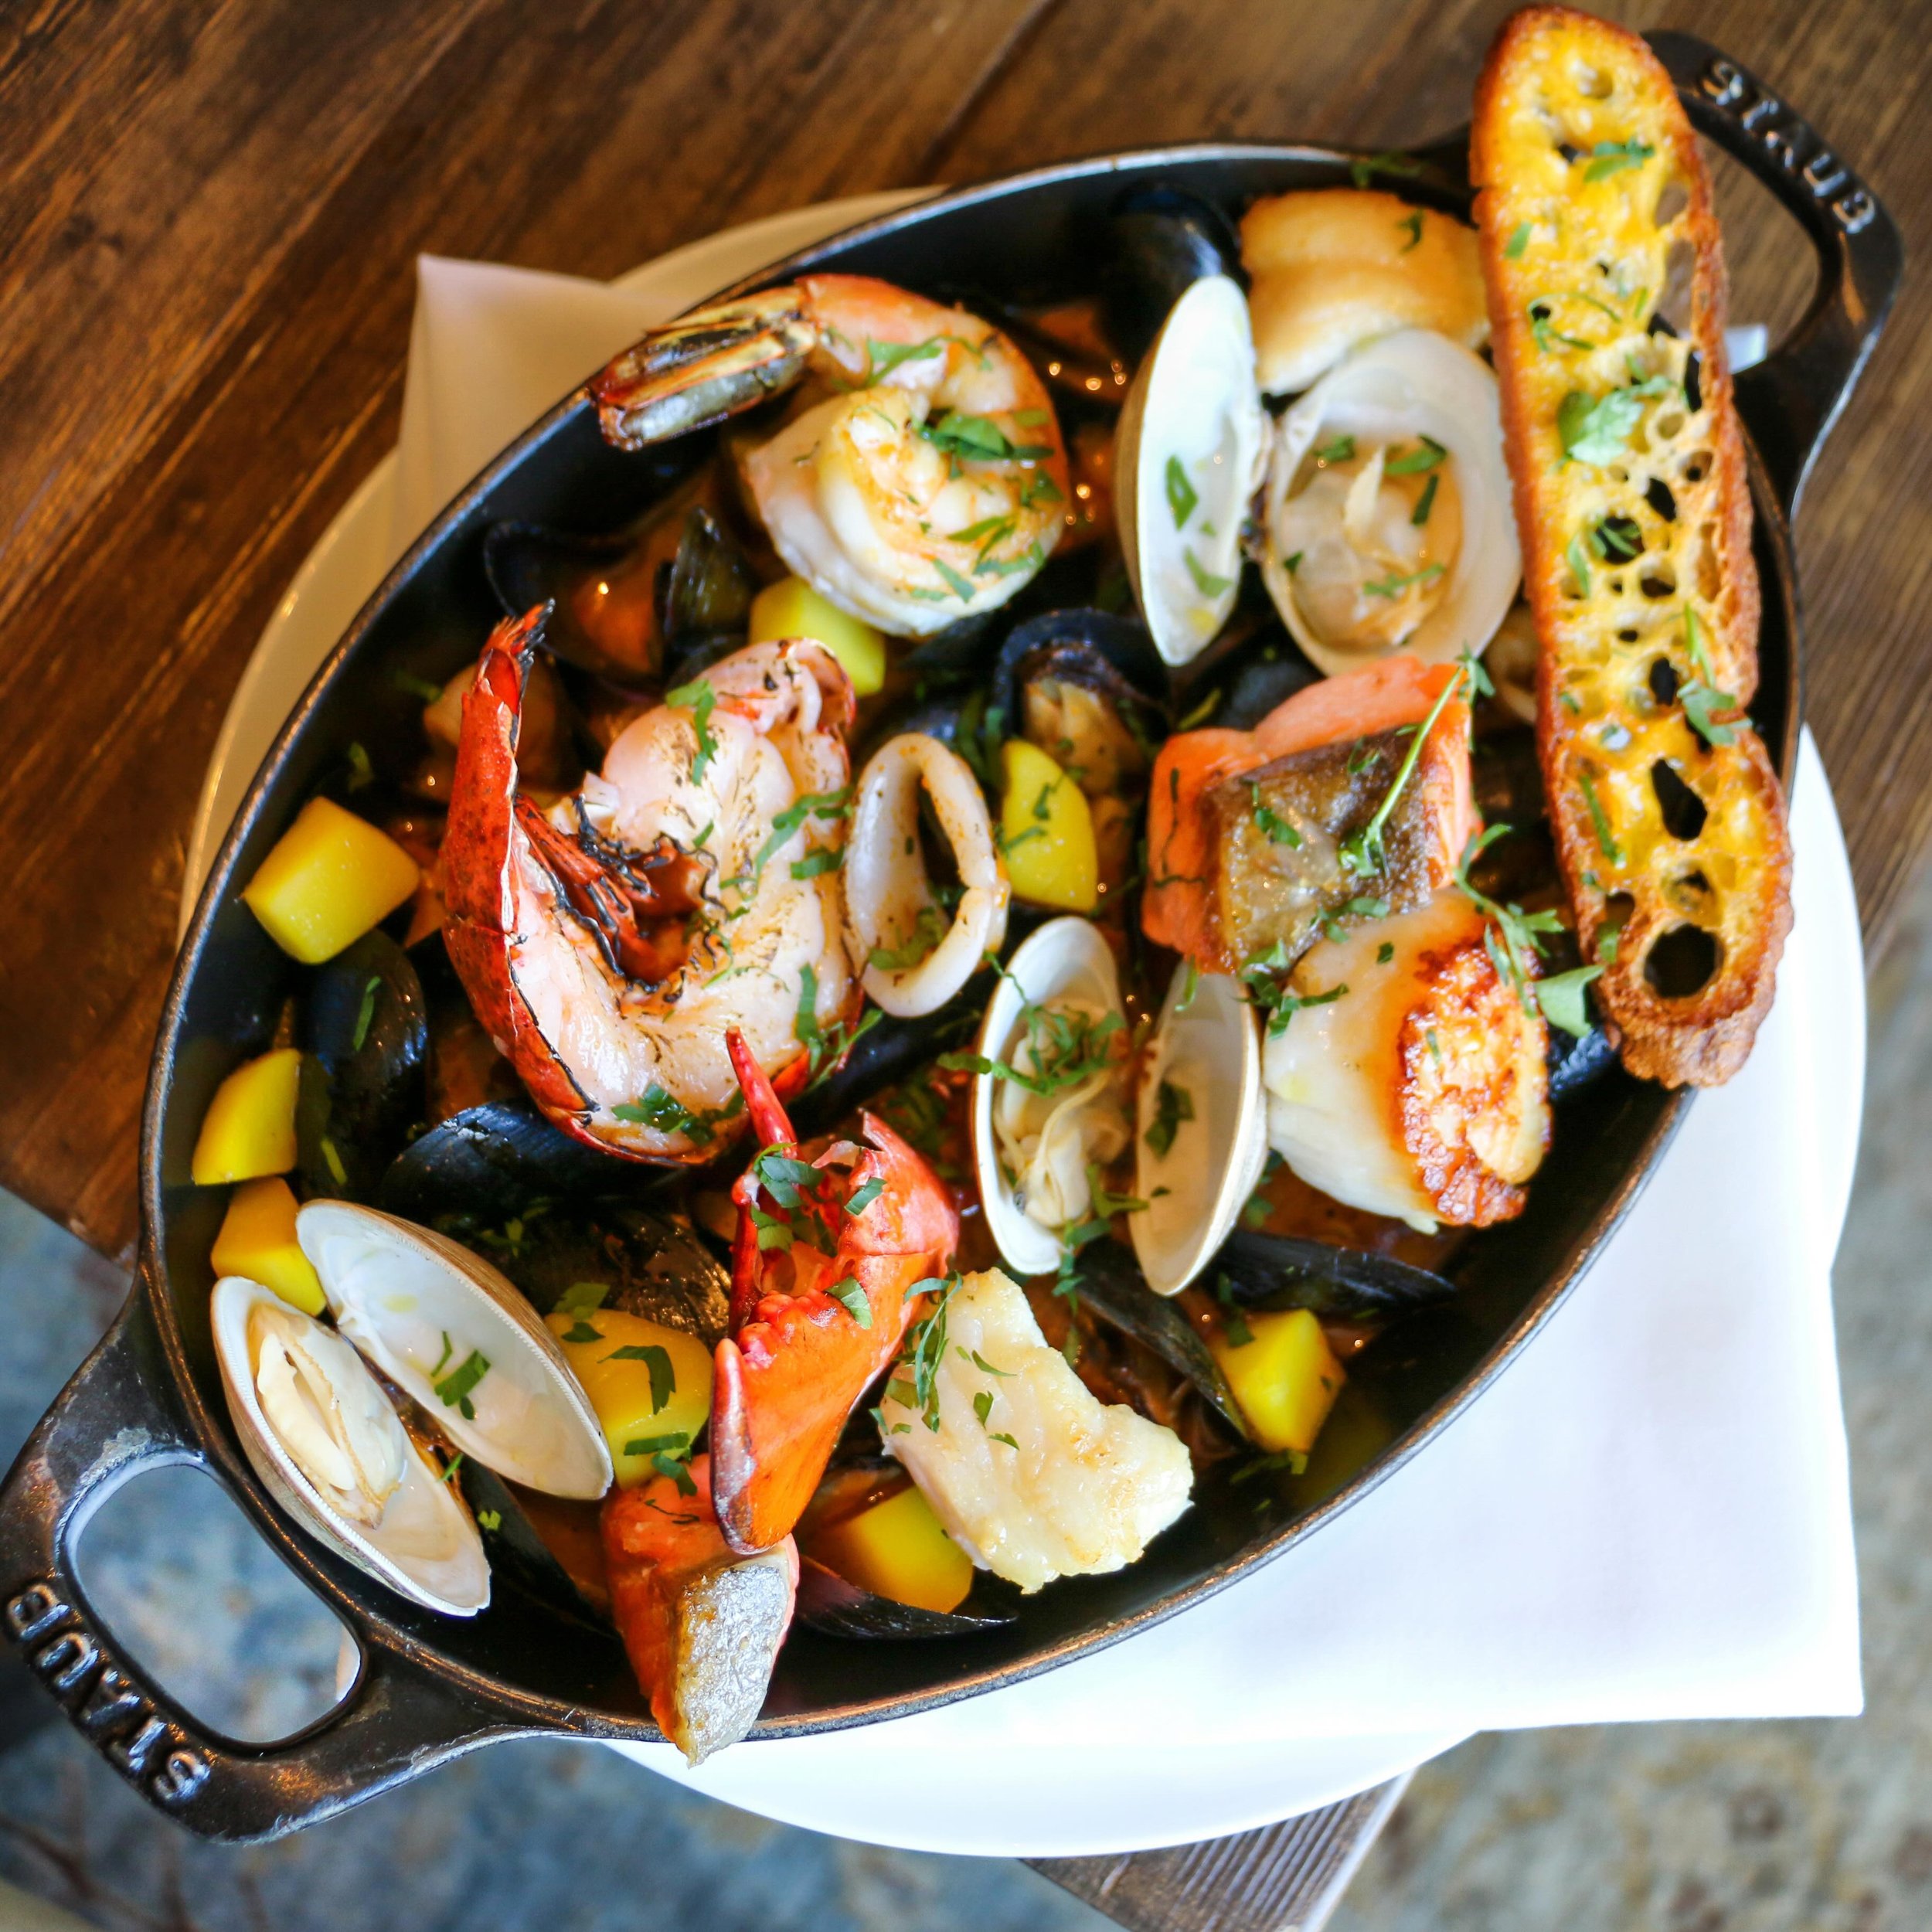 A classic, done best 🦞 

Bouillabaisse du Midi: lobster, scallop, shrimp, calamari, mussels, clams

#boston #bostonfood #bostonfoodies #bostoneats #bostonrestaurants #bostonlunch #frenchfood #bostonpublicgarden #bistro #seafood #bouillabaisse #lobst